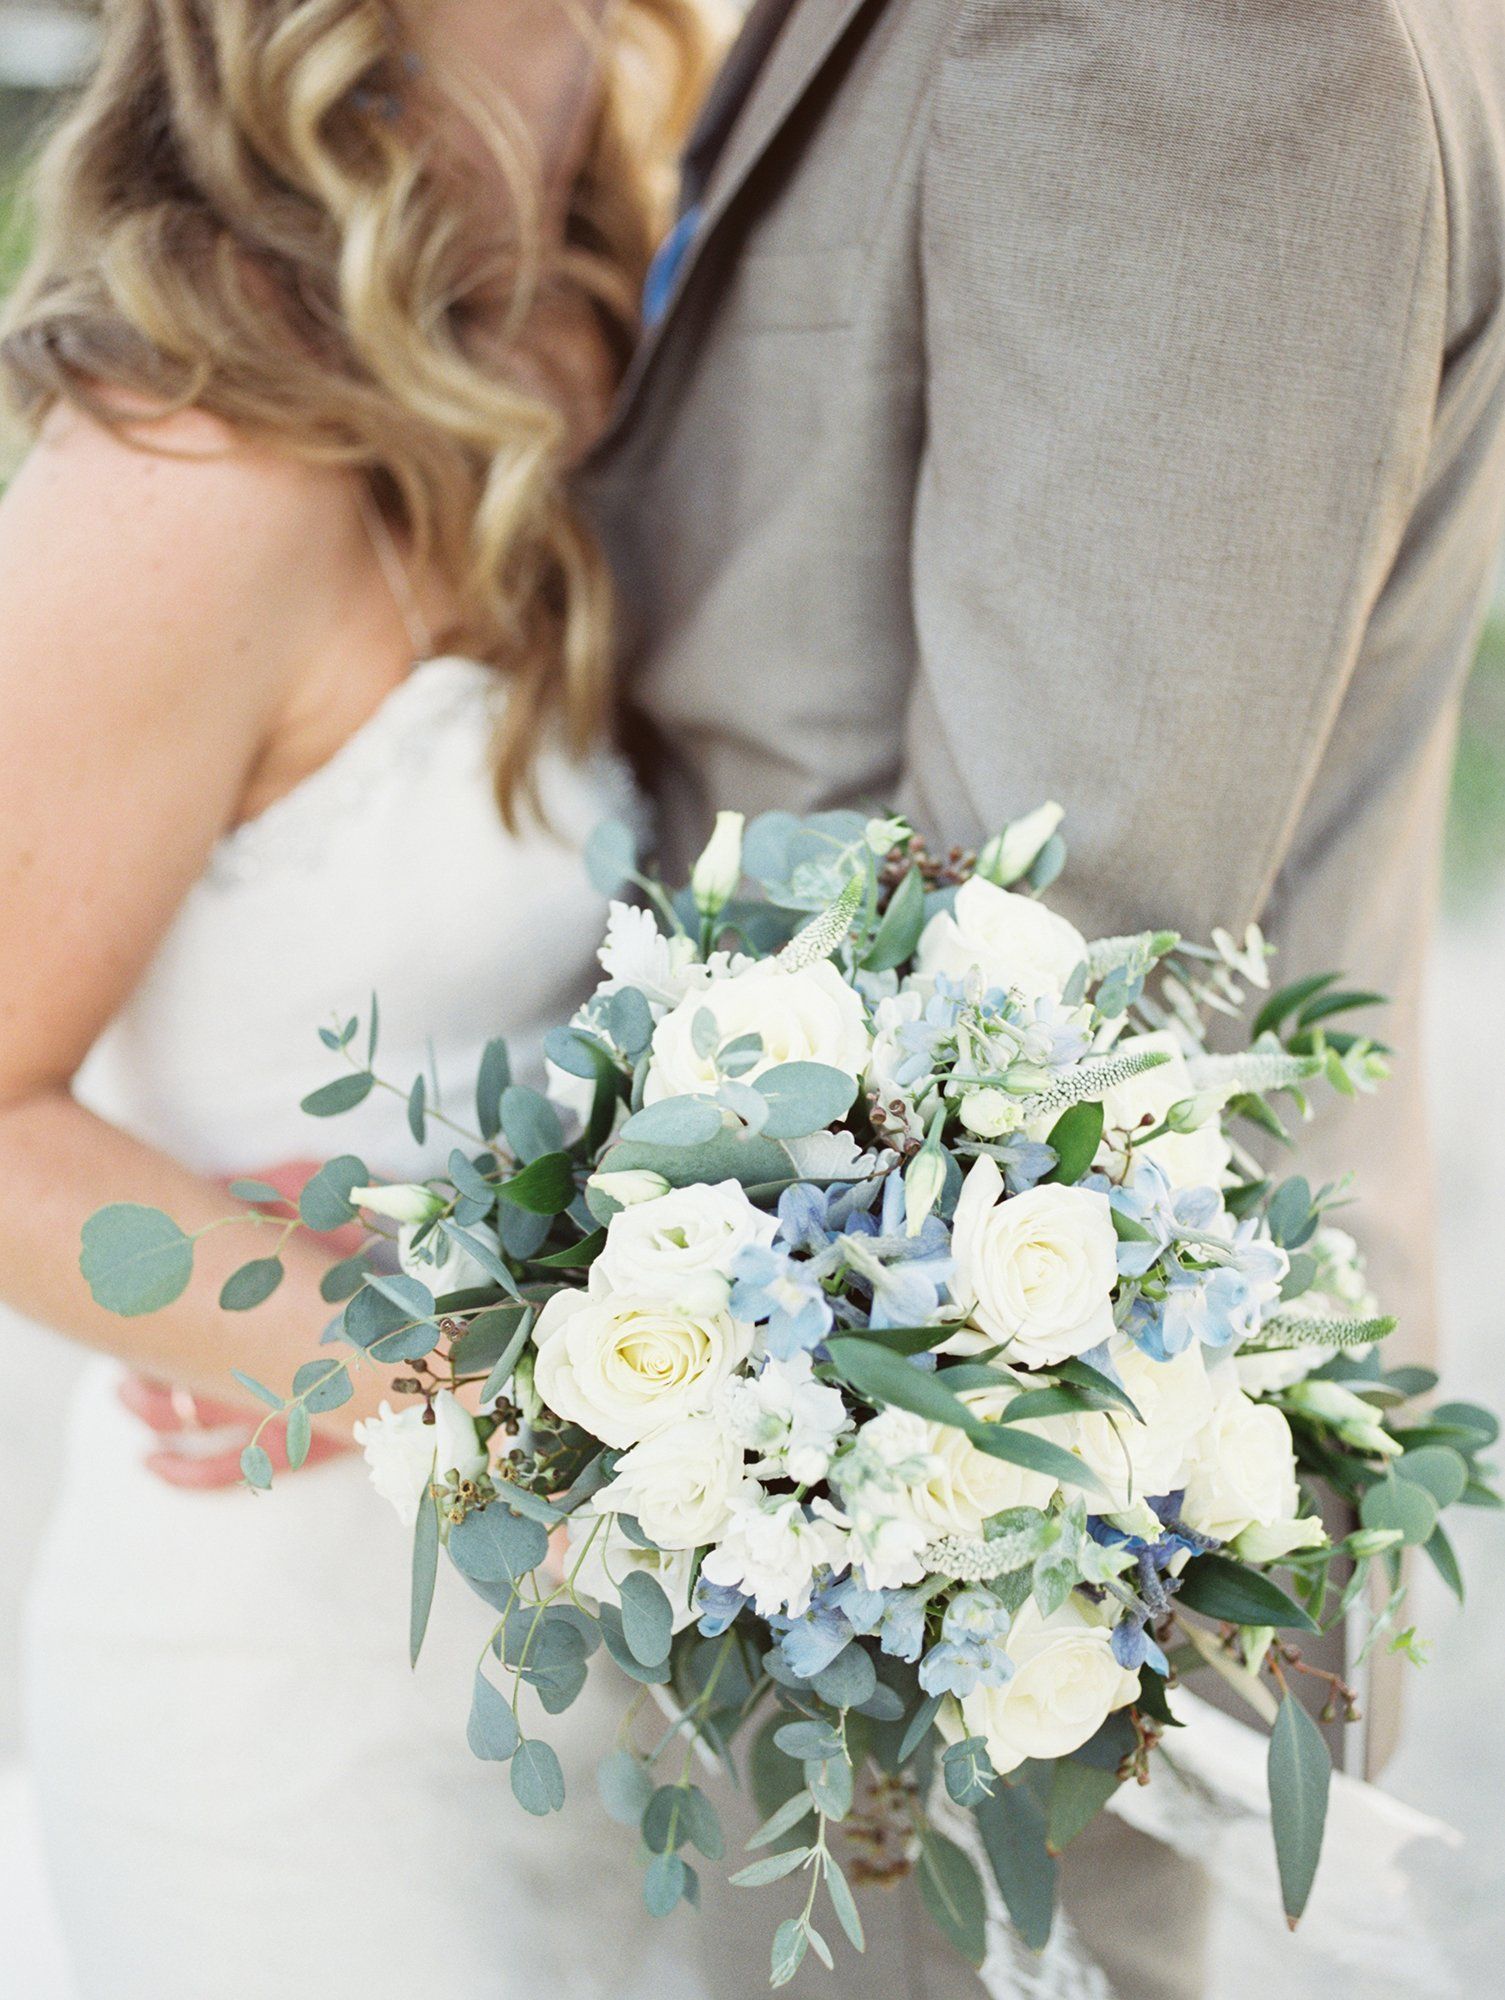 19 wedding Blue bouquet ideas